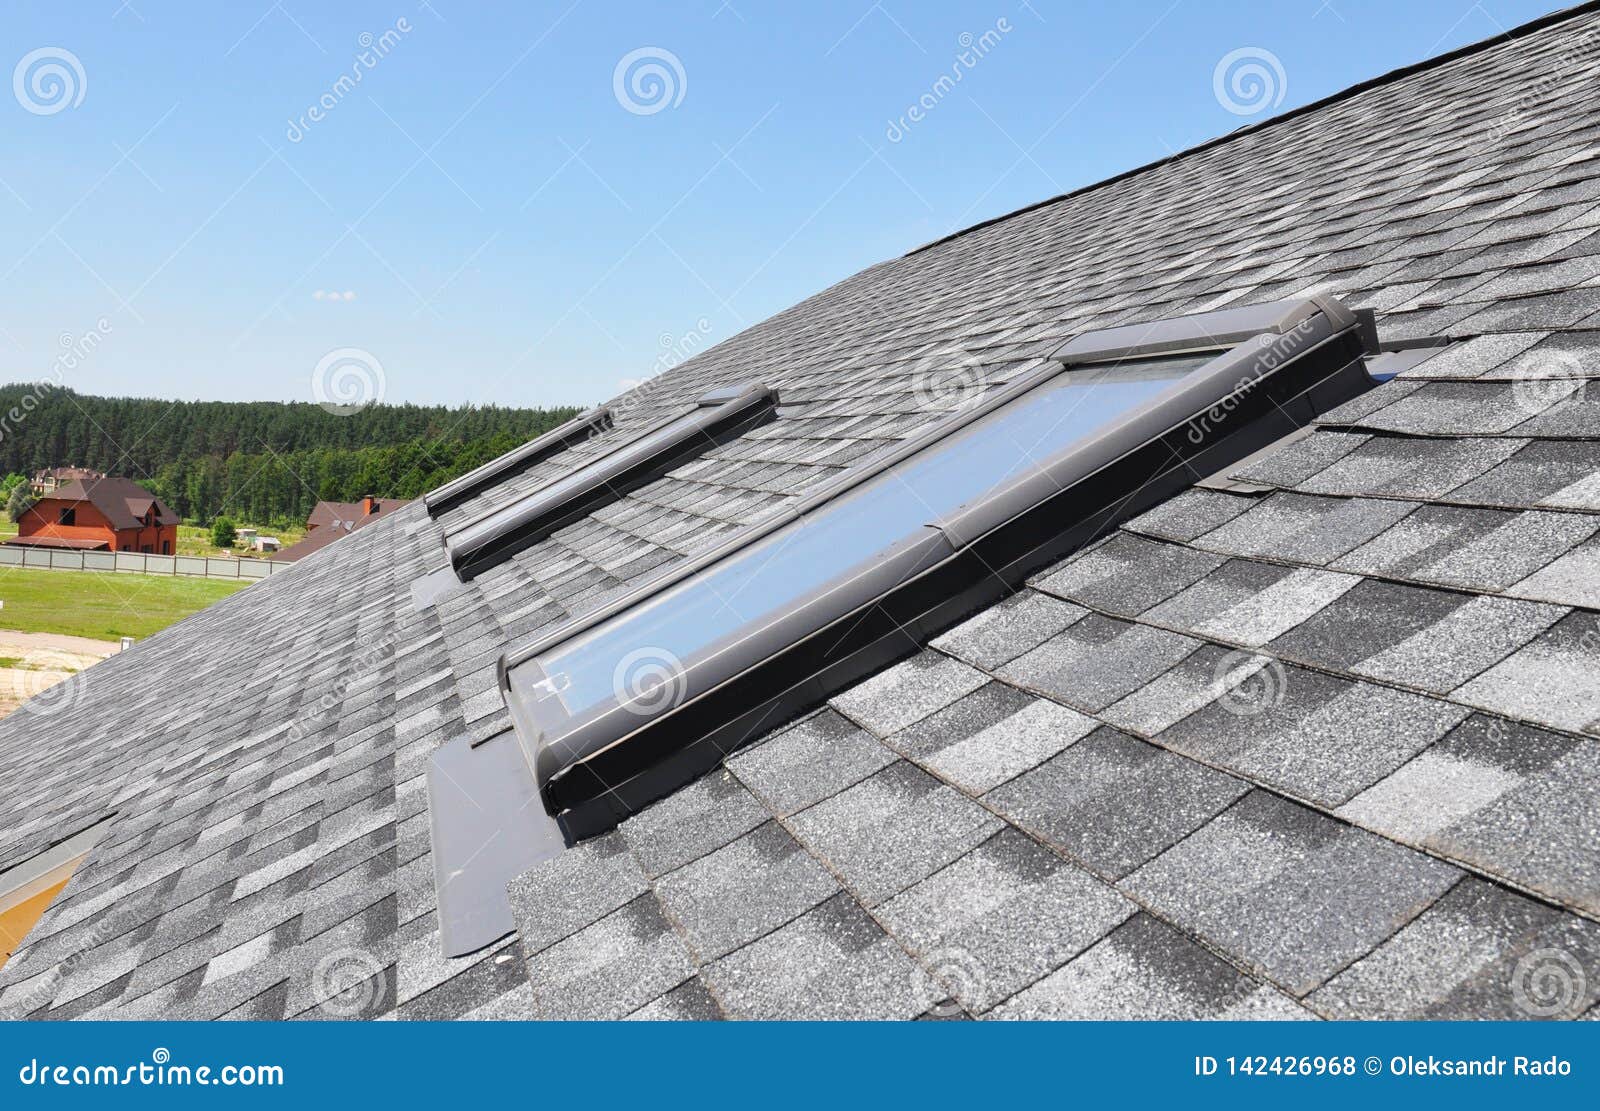 skylights windows on modern house roof top.  attic skylight windows on asphalt shingles roof